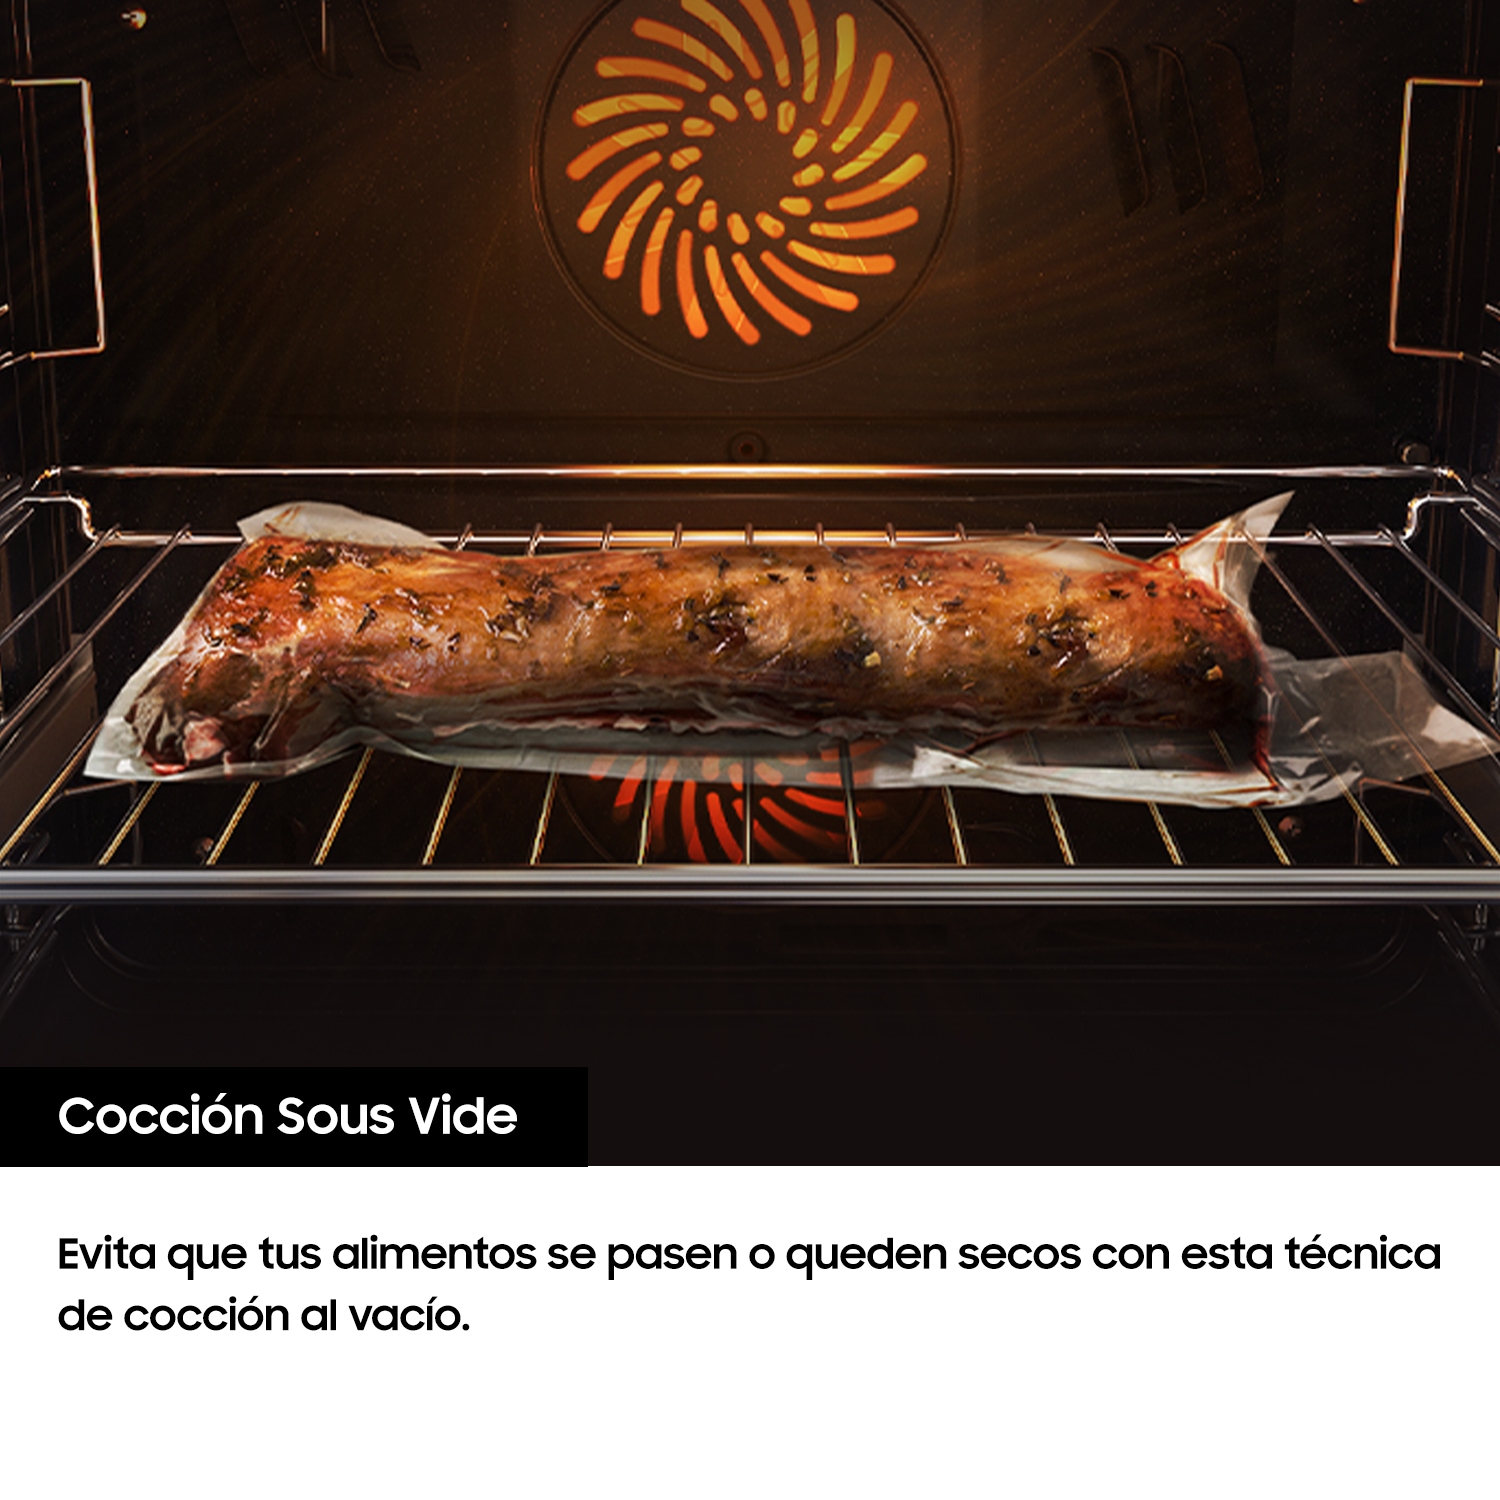 Samsung Bespoke Series 5 NV7B5750TAK/U4 Oven Review: Flexible cooking